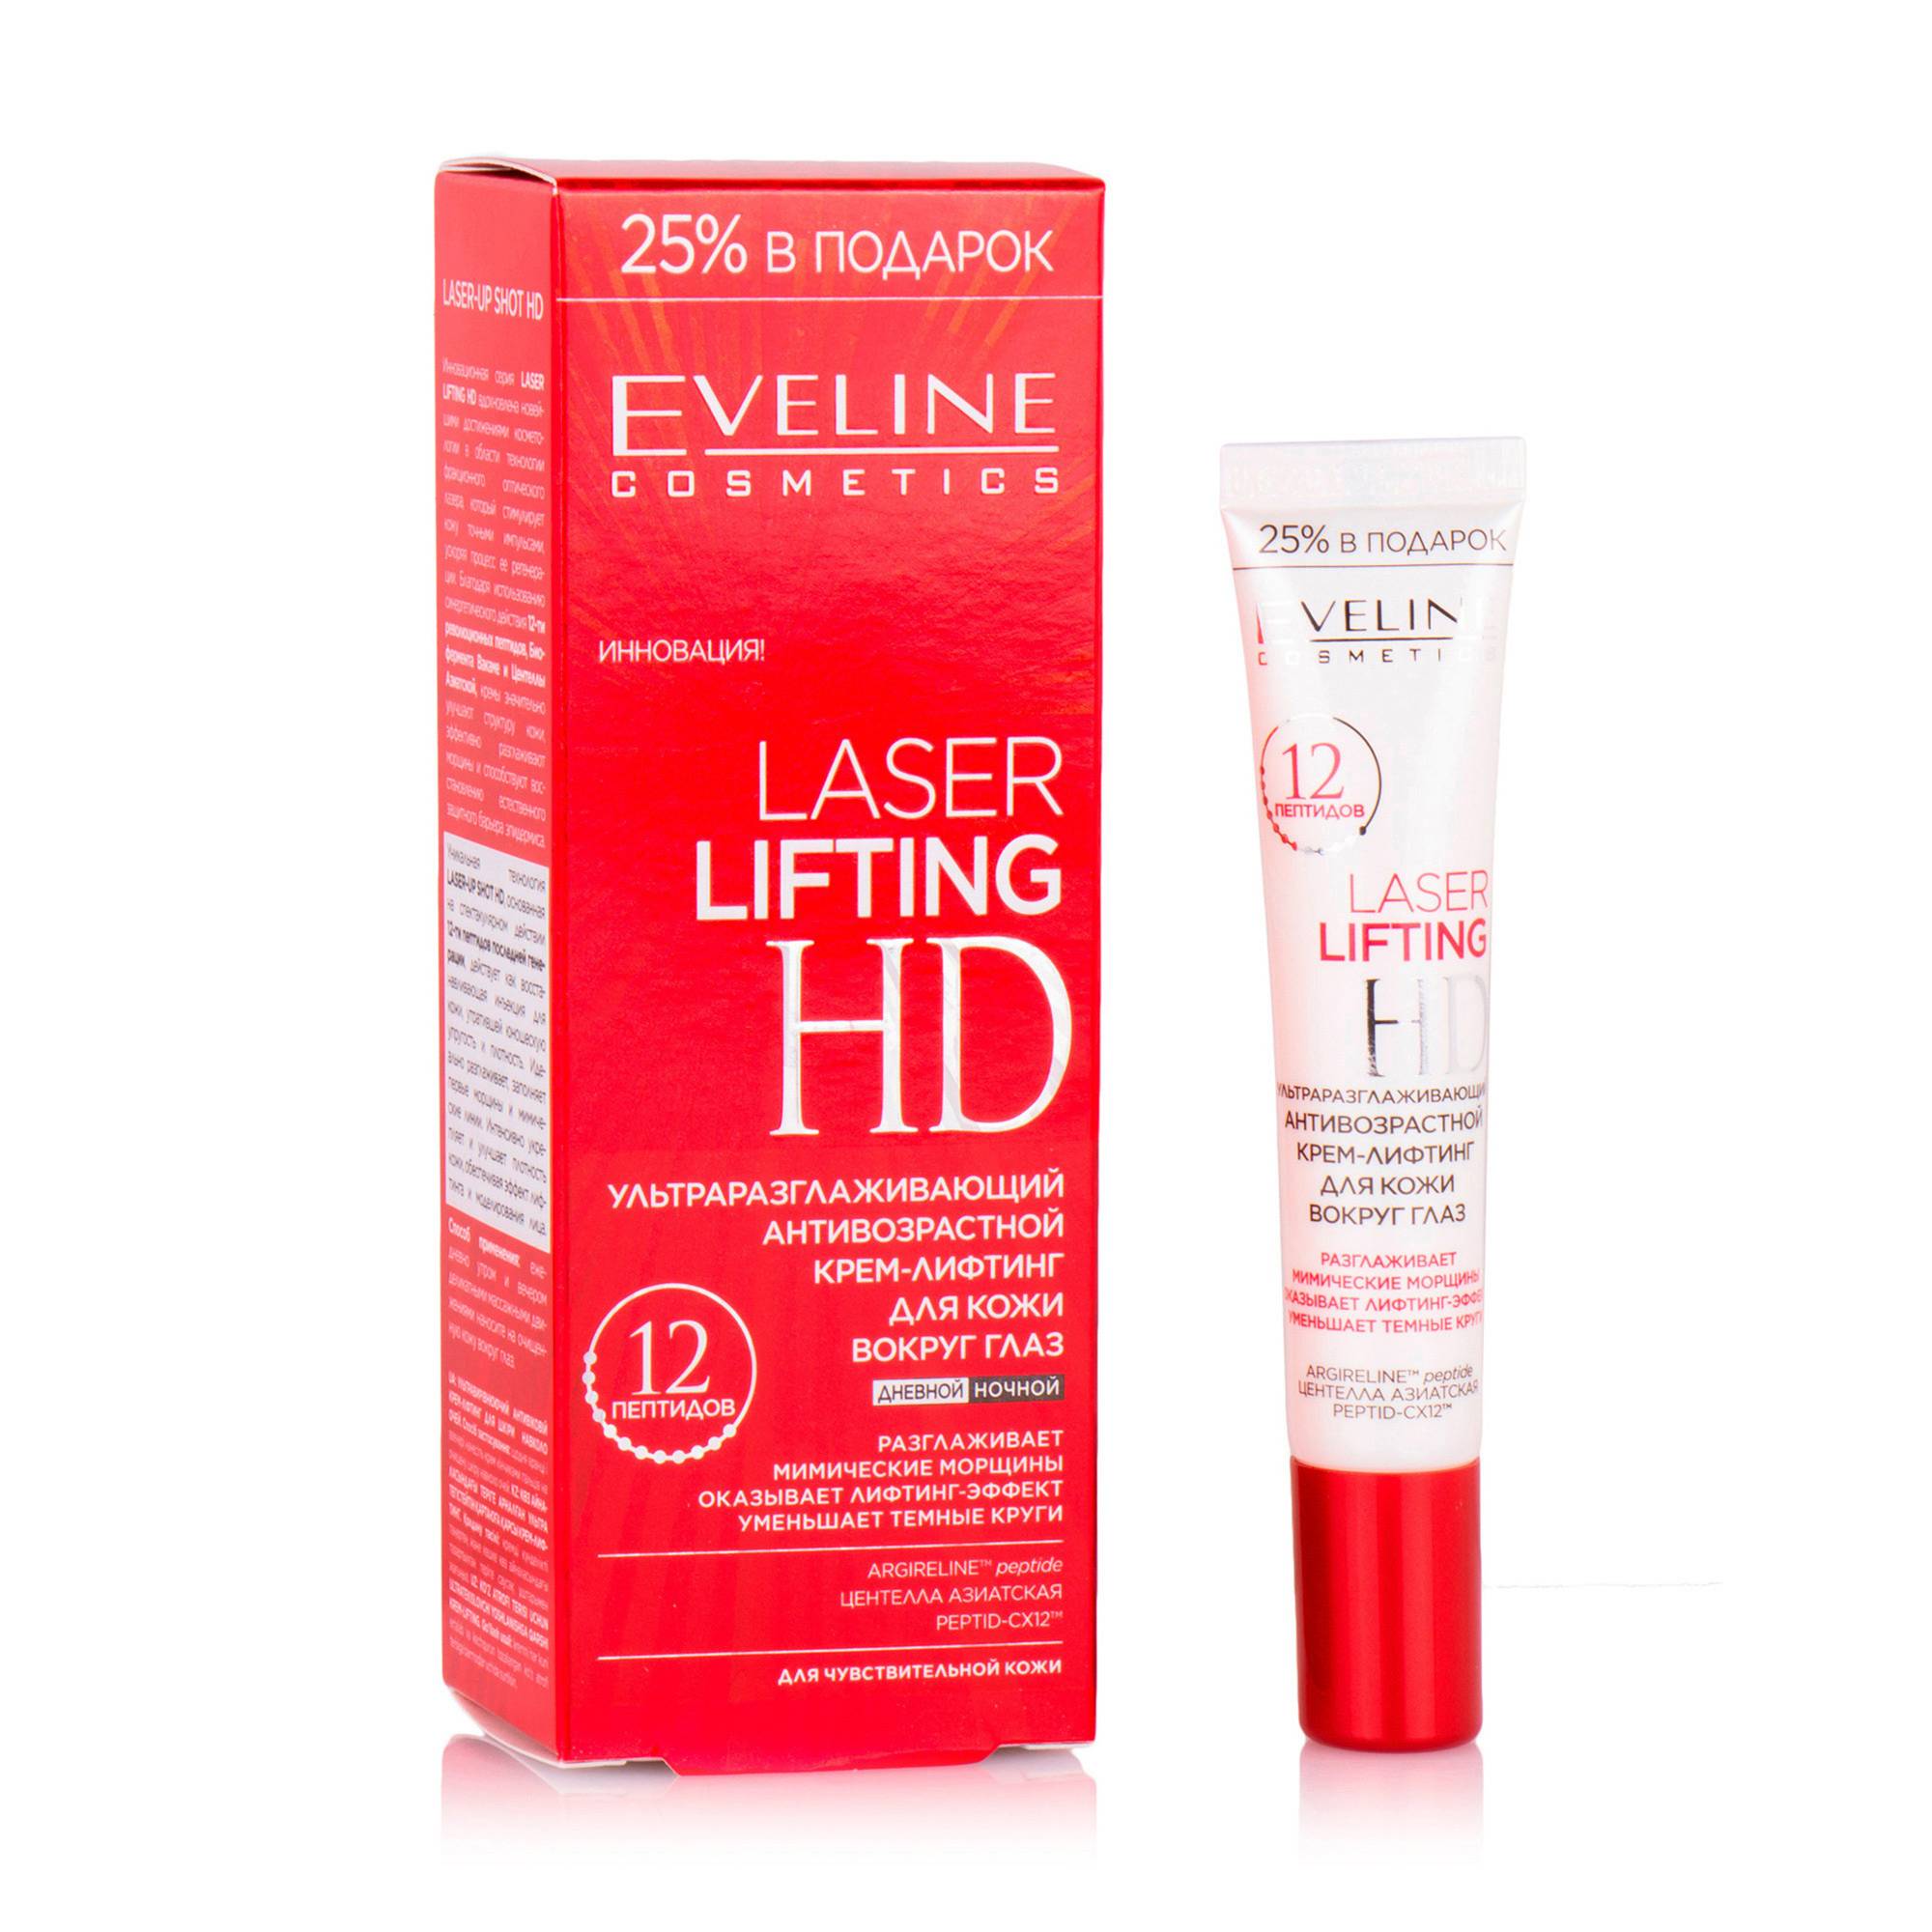 Eveline Laser precision крем вокруг глаз: отзыв